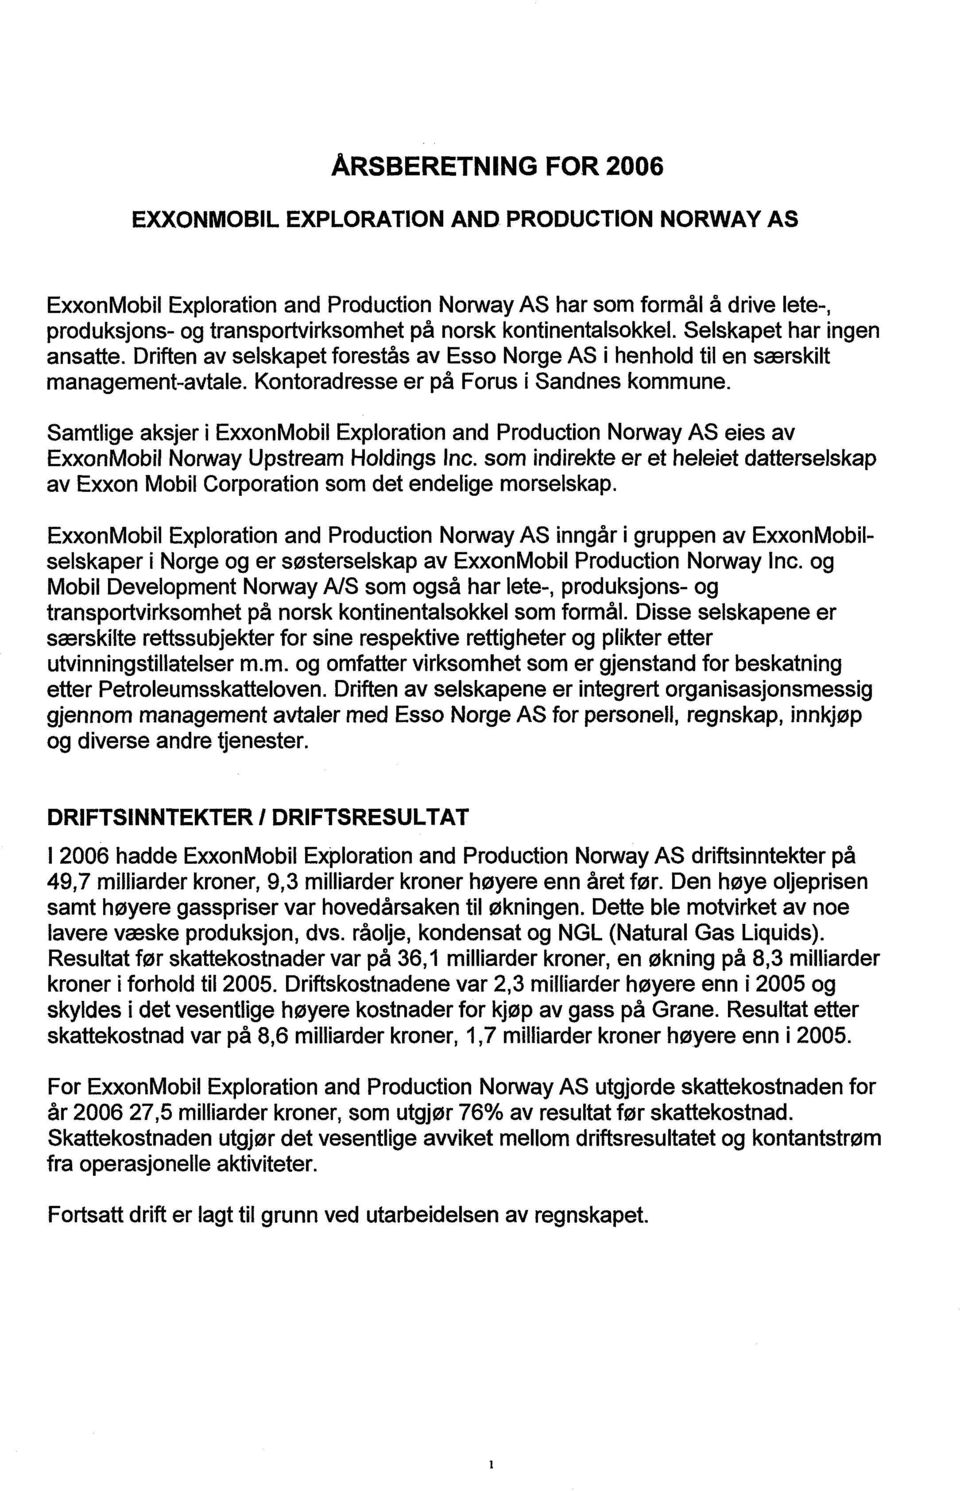 Samtlige aksjer i ExxonMobil Exploration and Production Norway AS eies av ExxonMobil Norway Upstream Holdings Inc.